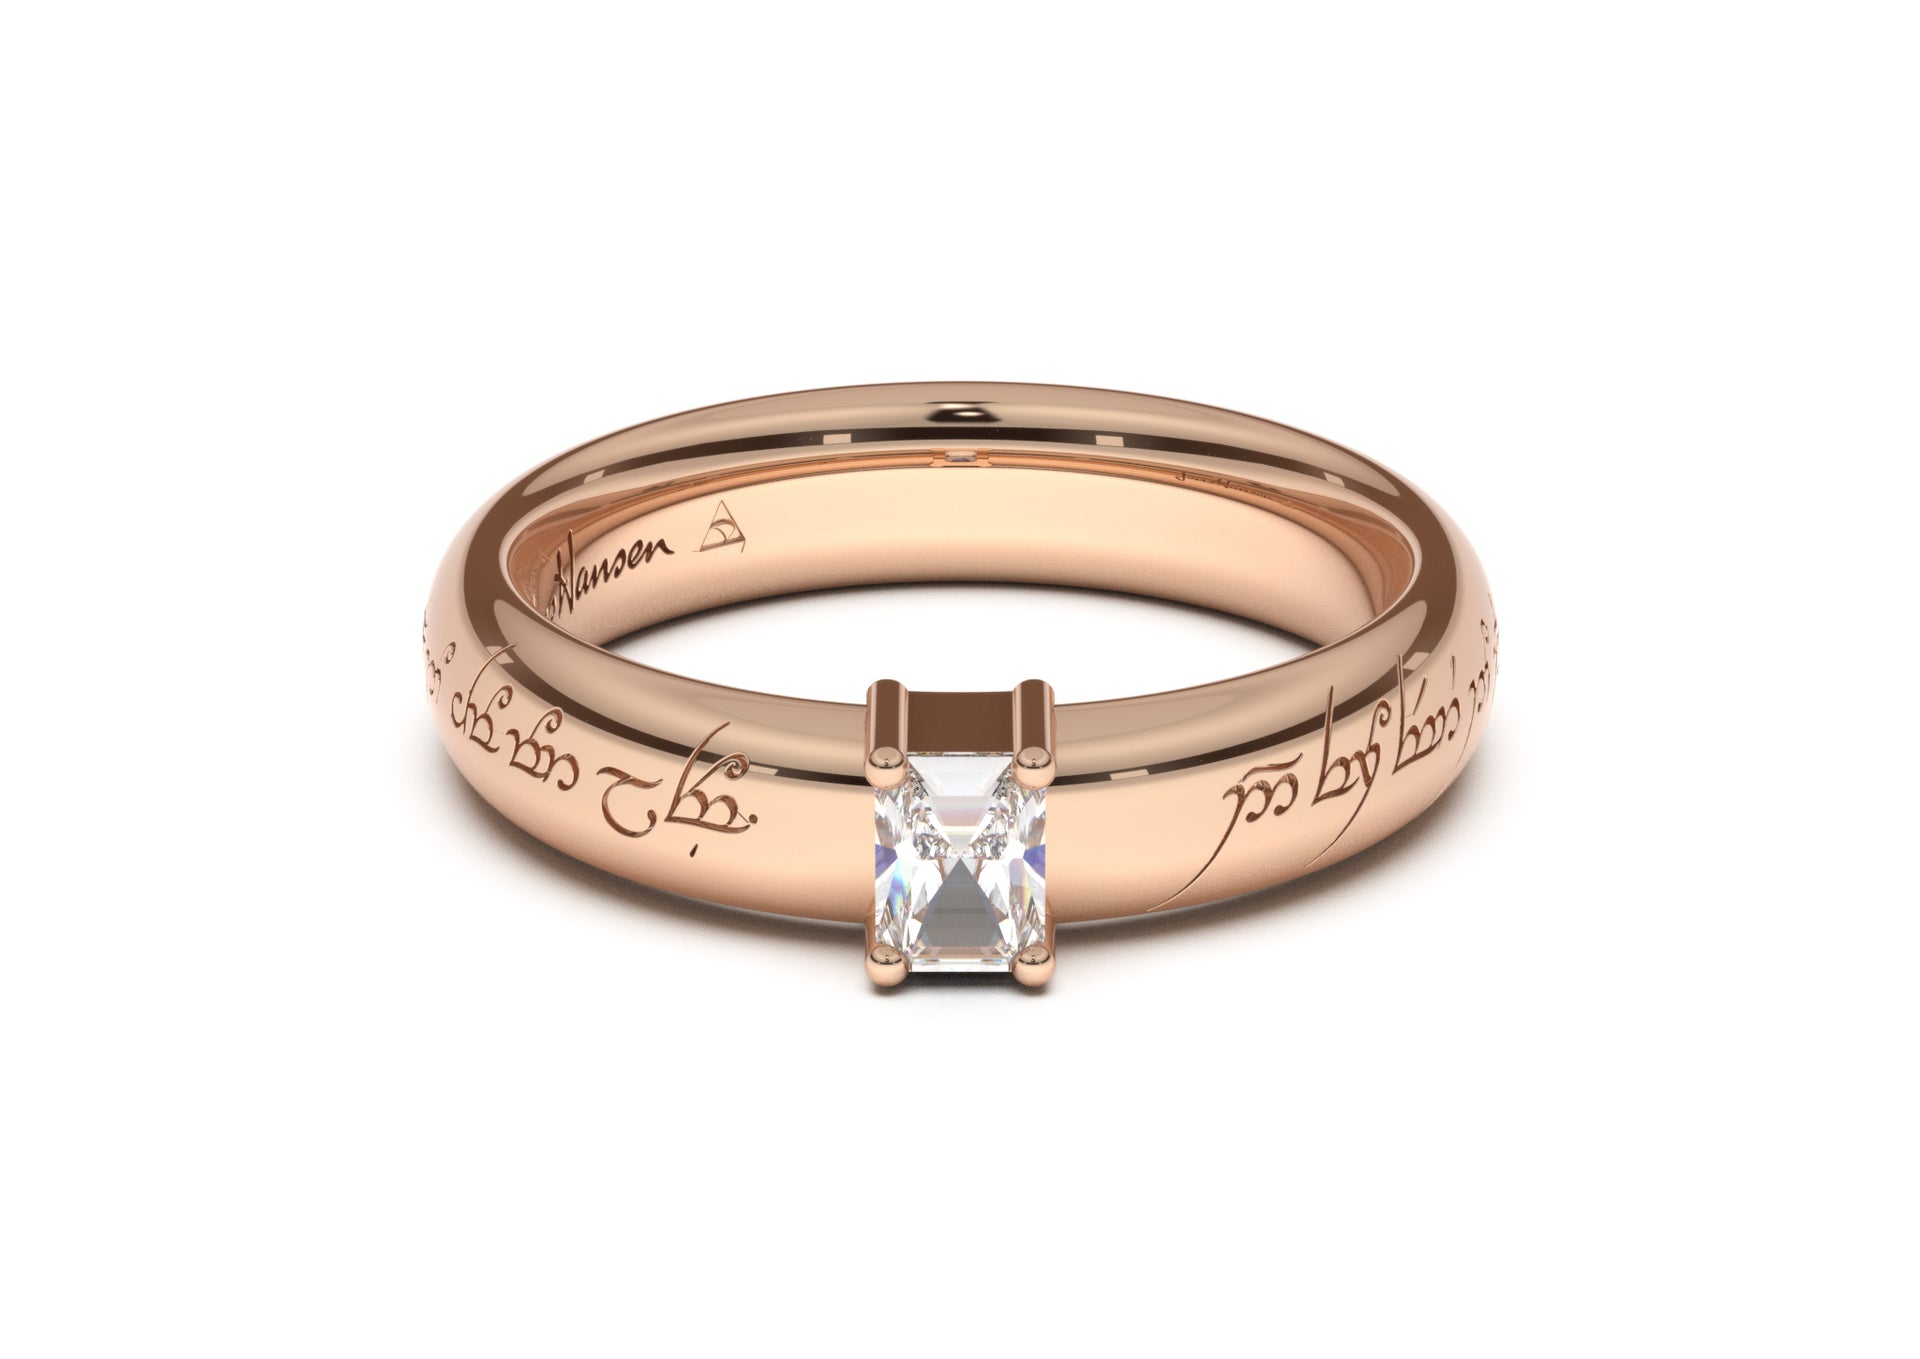 Emerald Cut Classic Elvish Engagement Ring, Red Gold